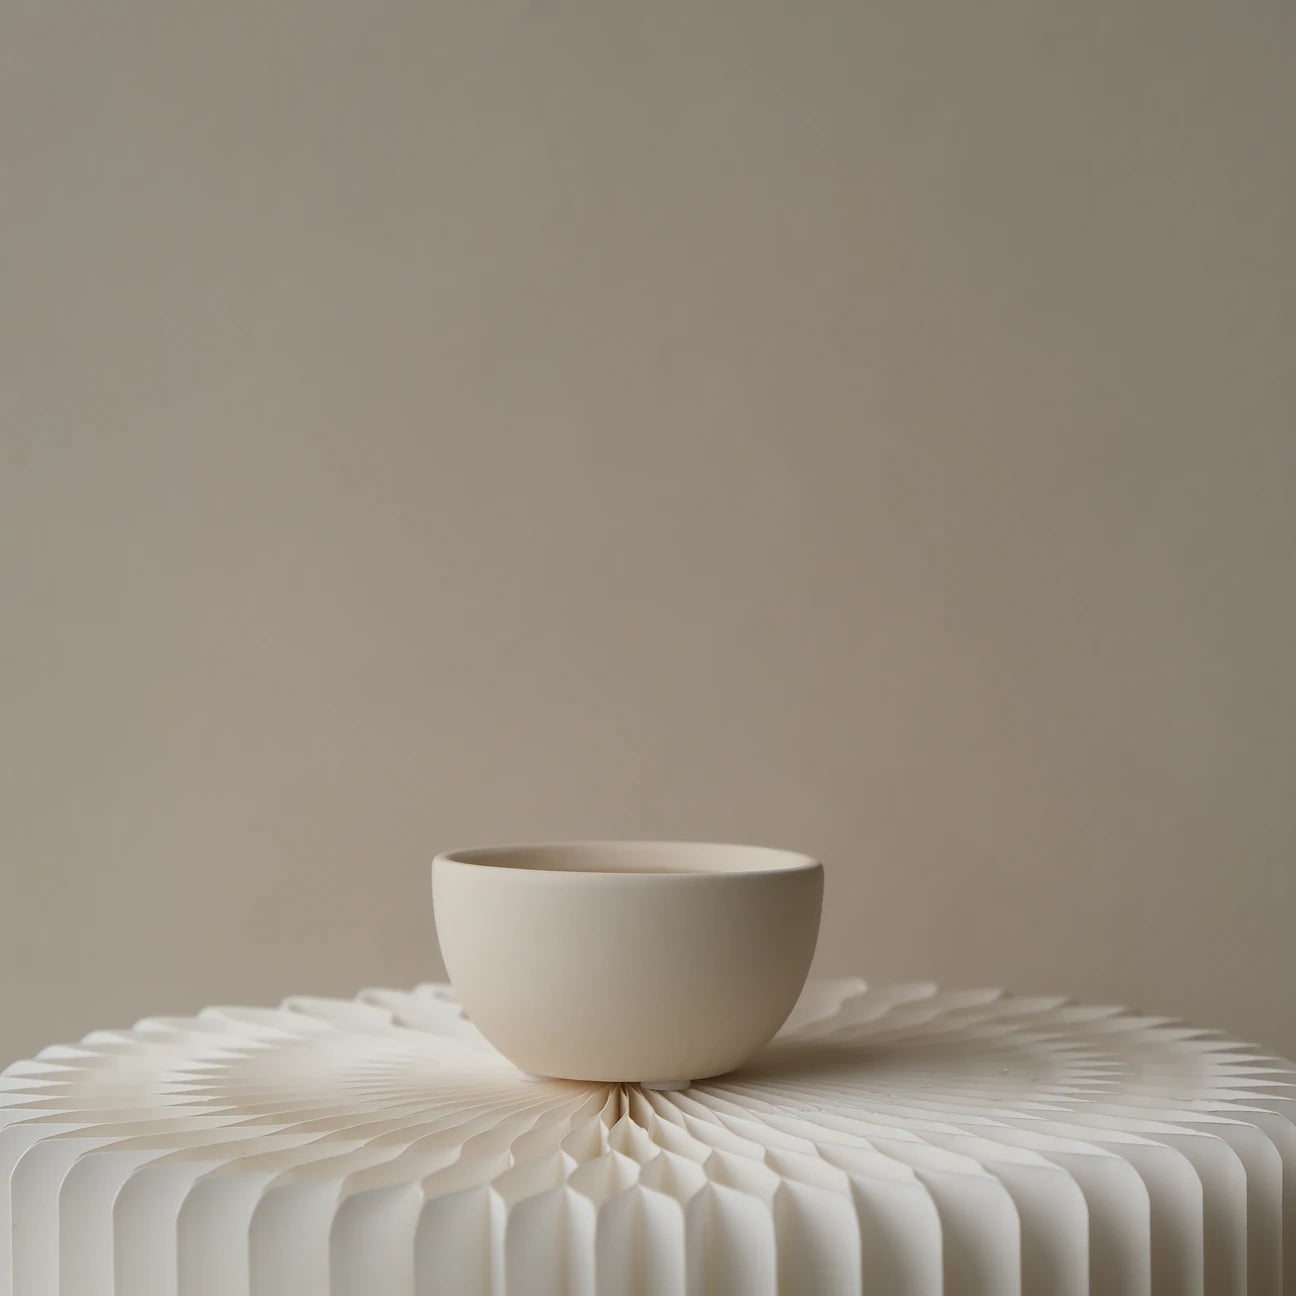 Mini ceramic bowl available at Rook & Rose.